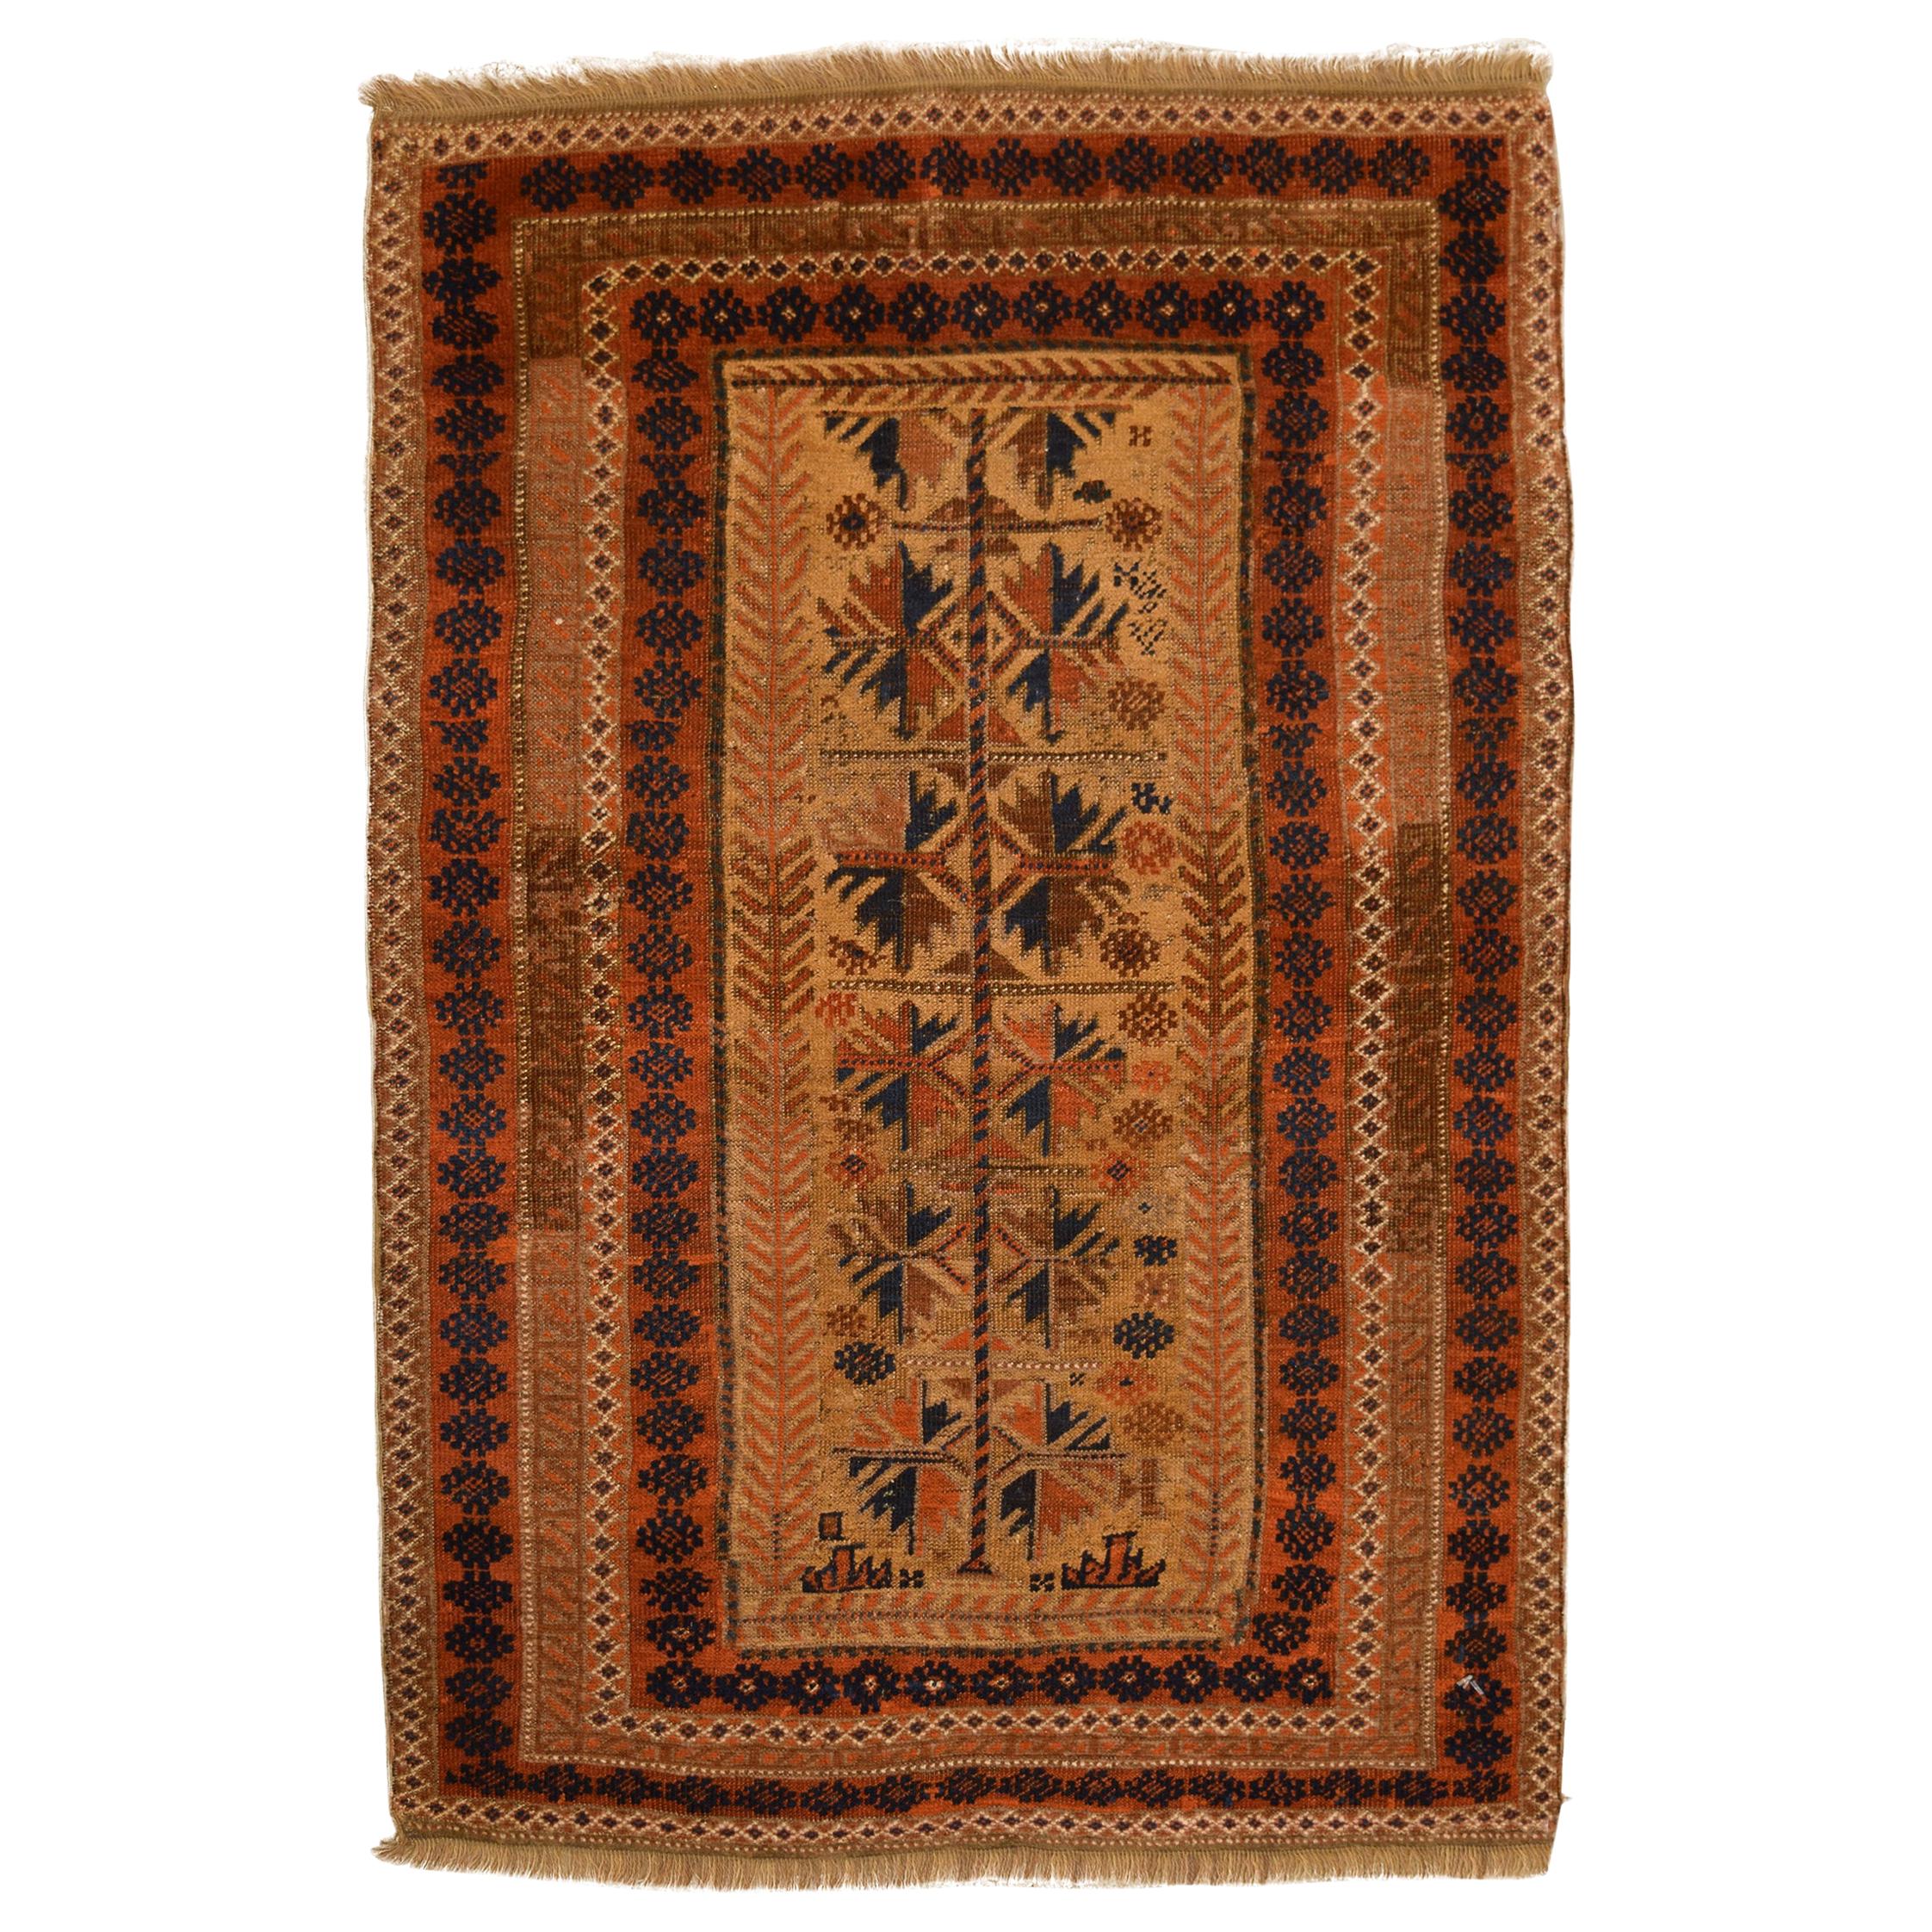 Antique 1870s Persian Balouchi Rug, Orange & Blue, 2x3